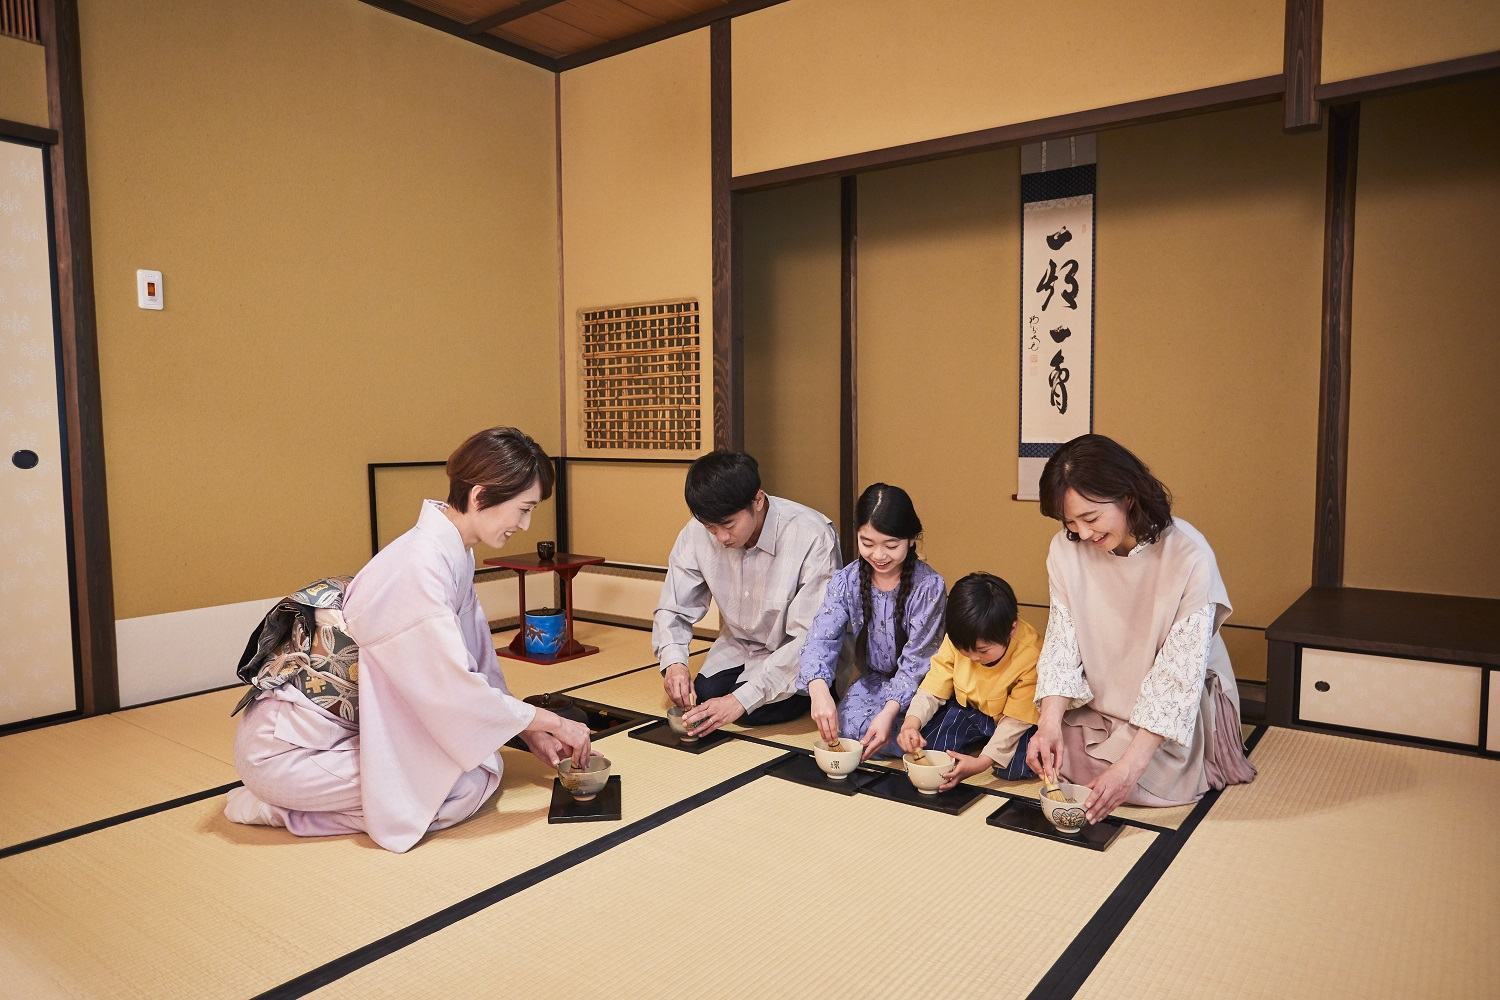 Tea ceremony experience at Sakai Plaza of Rikyu and Akiko